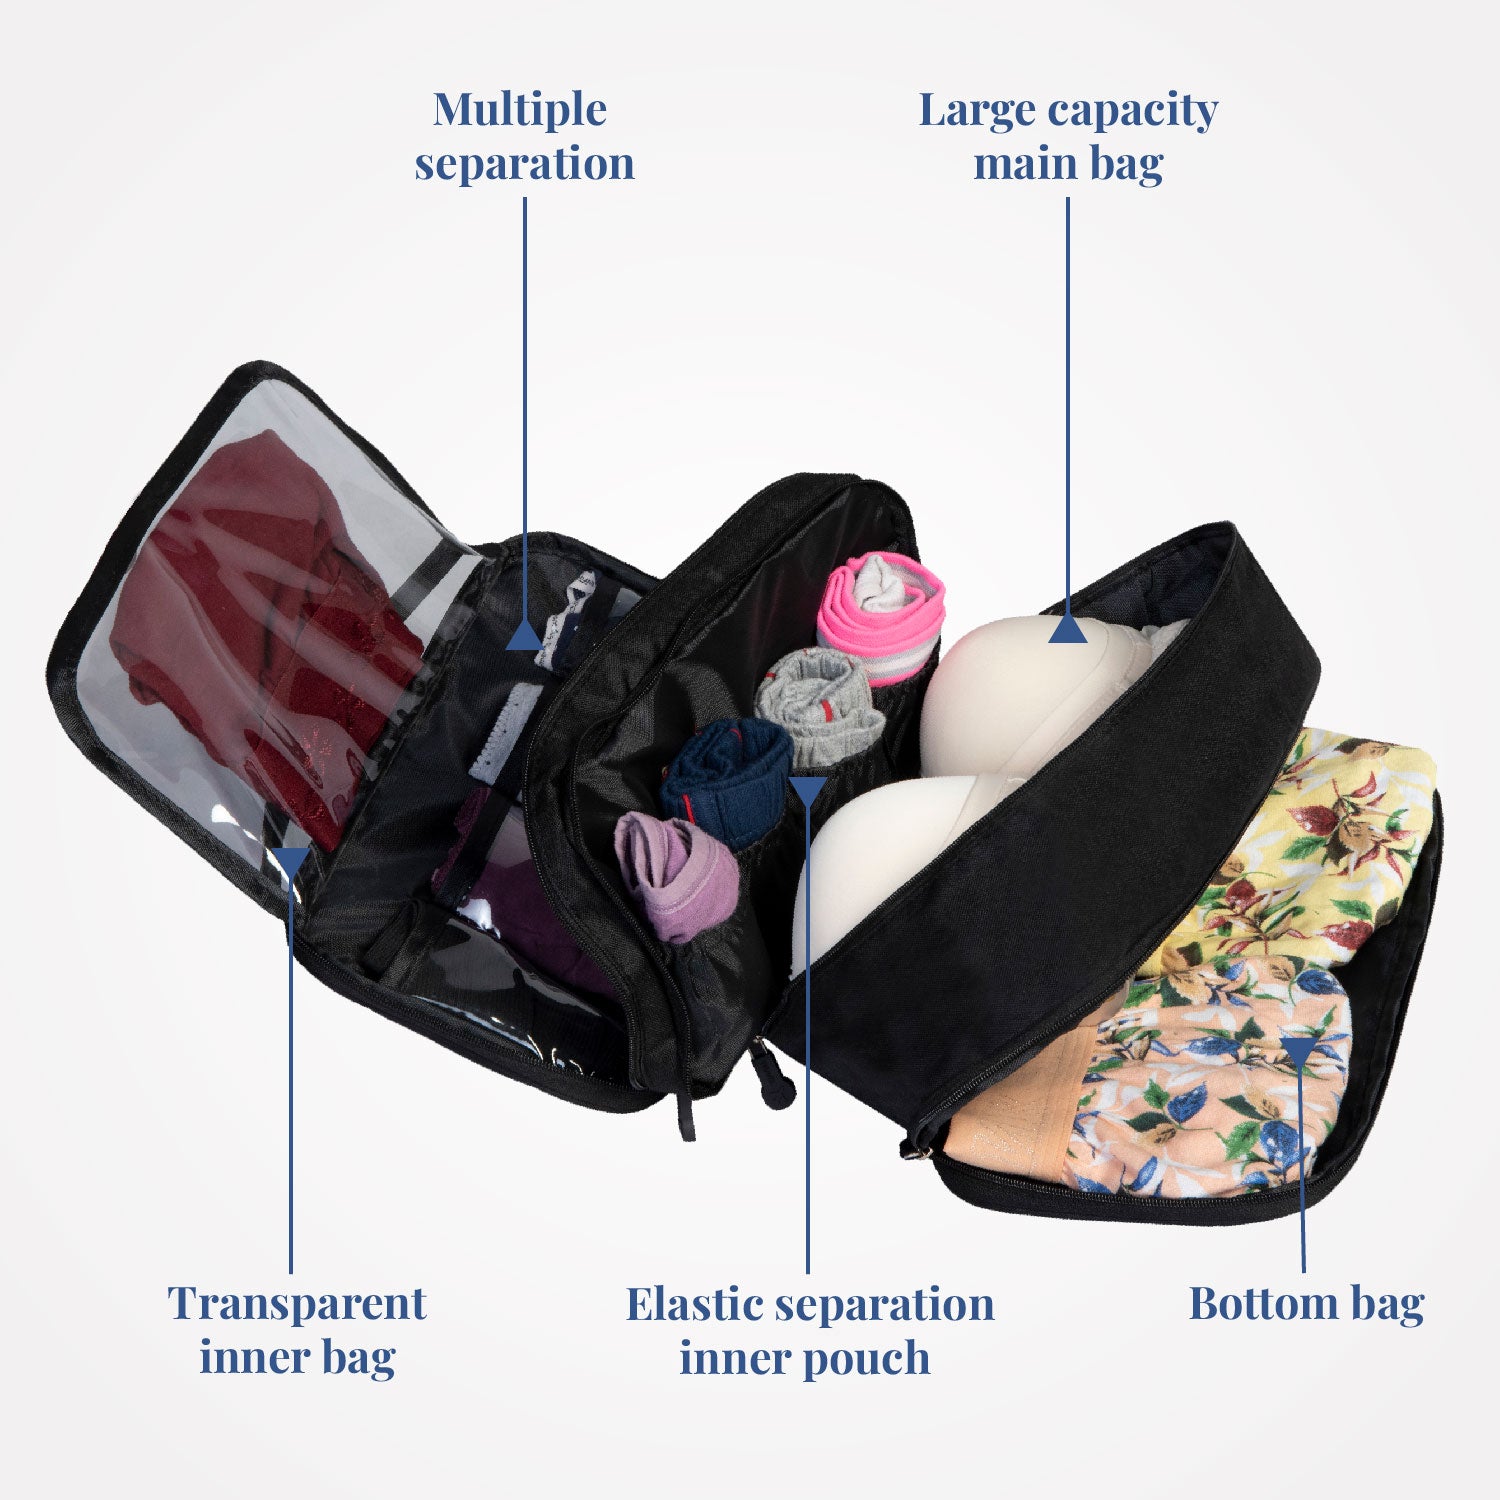 Buy Travel Undergarments Organizer Pouch Bag Printed 1pc Online